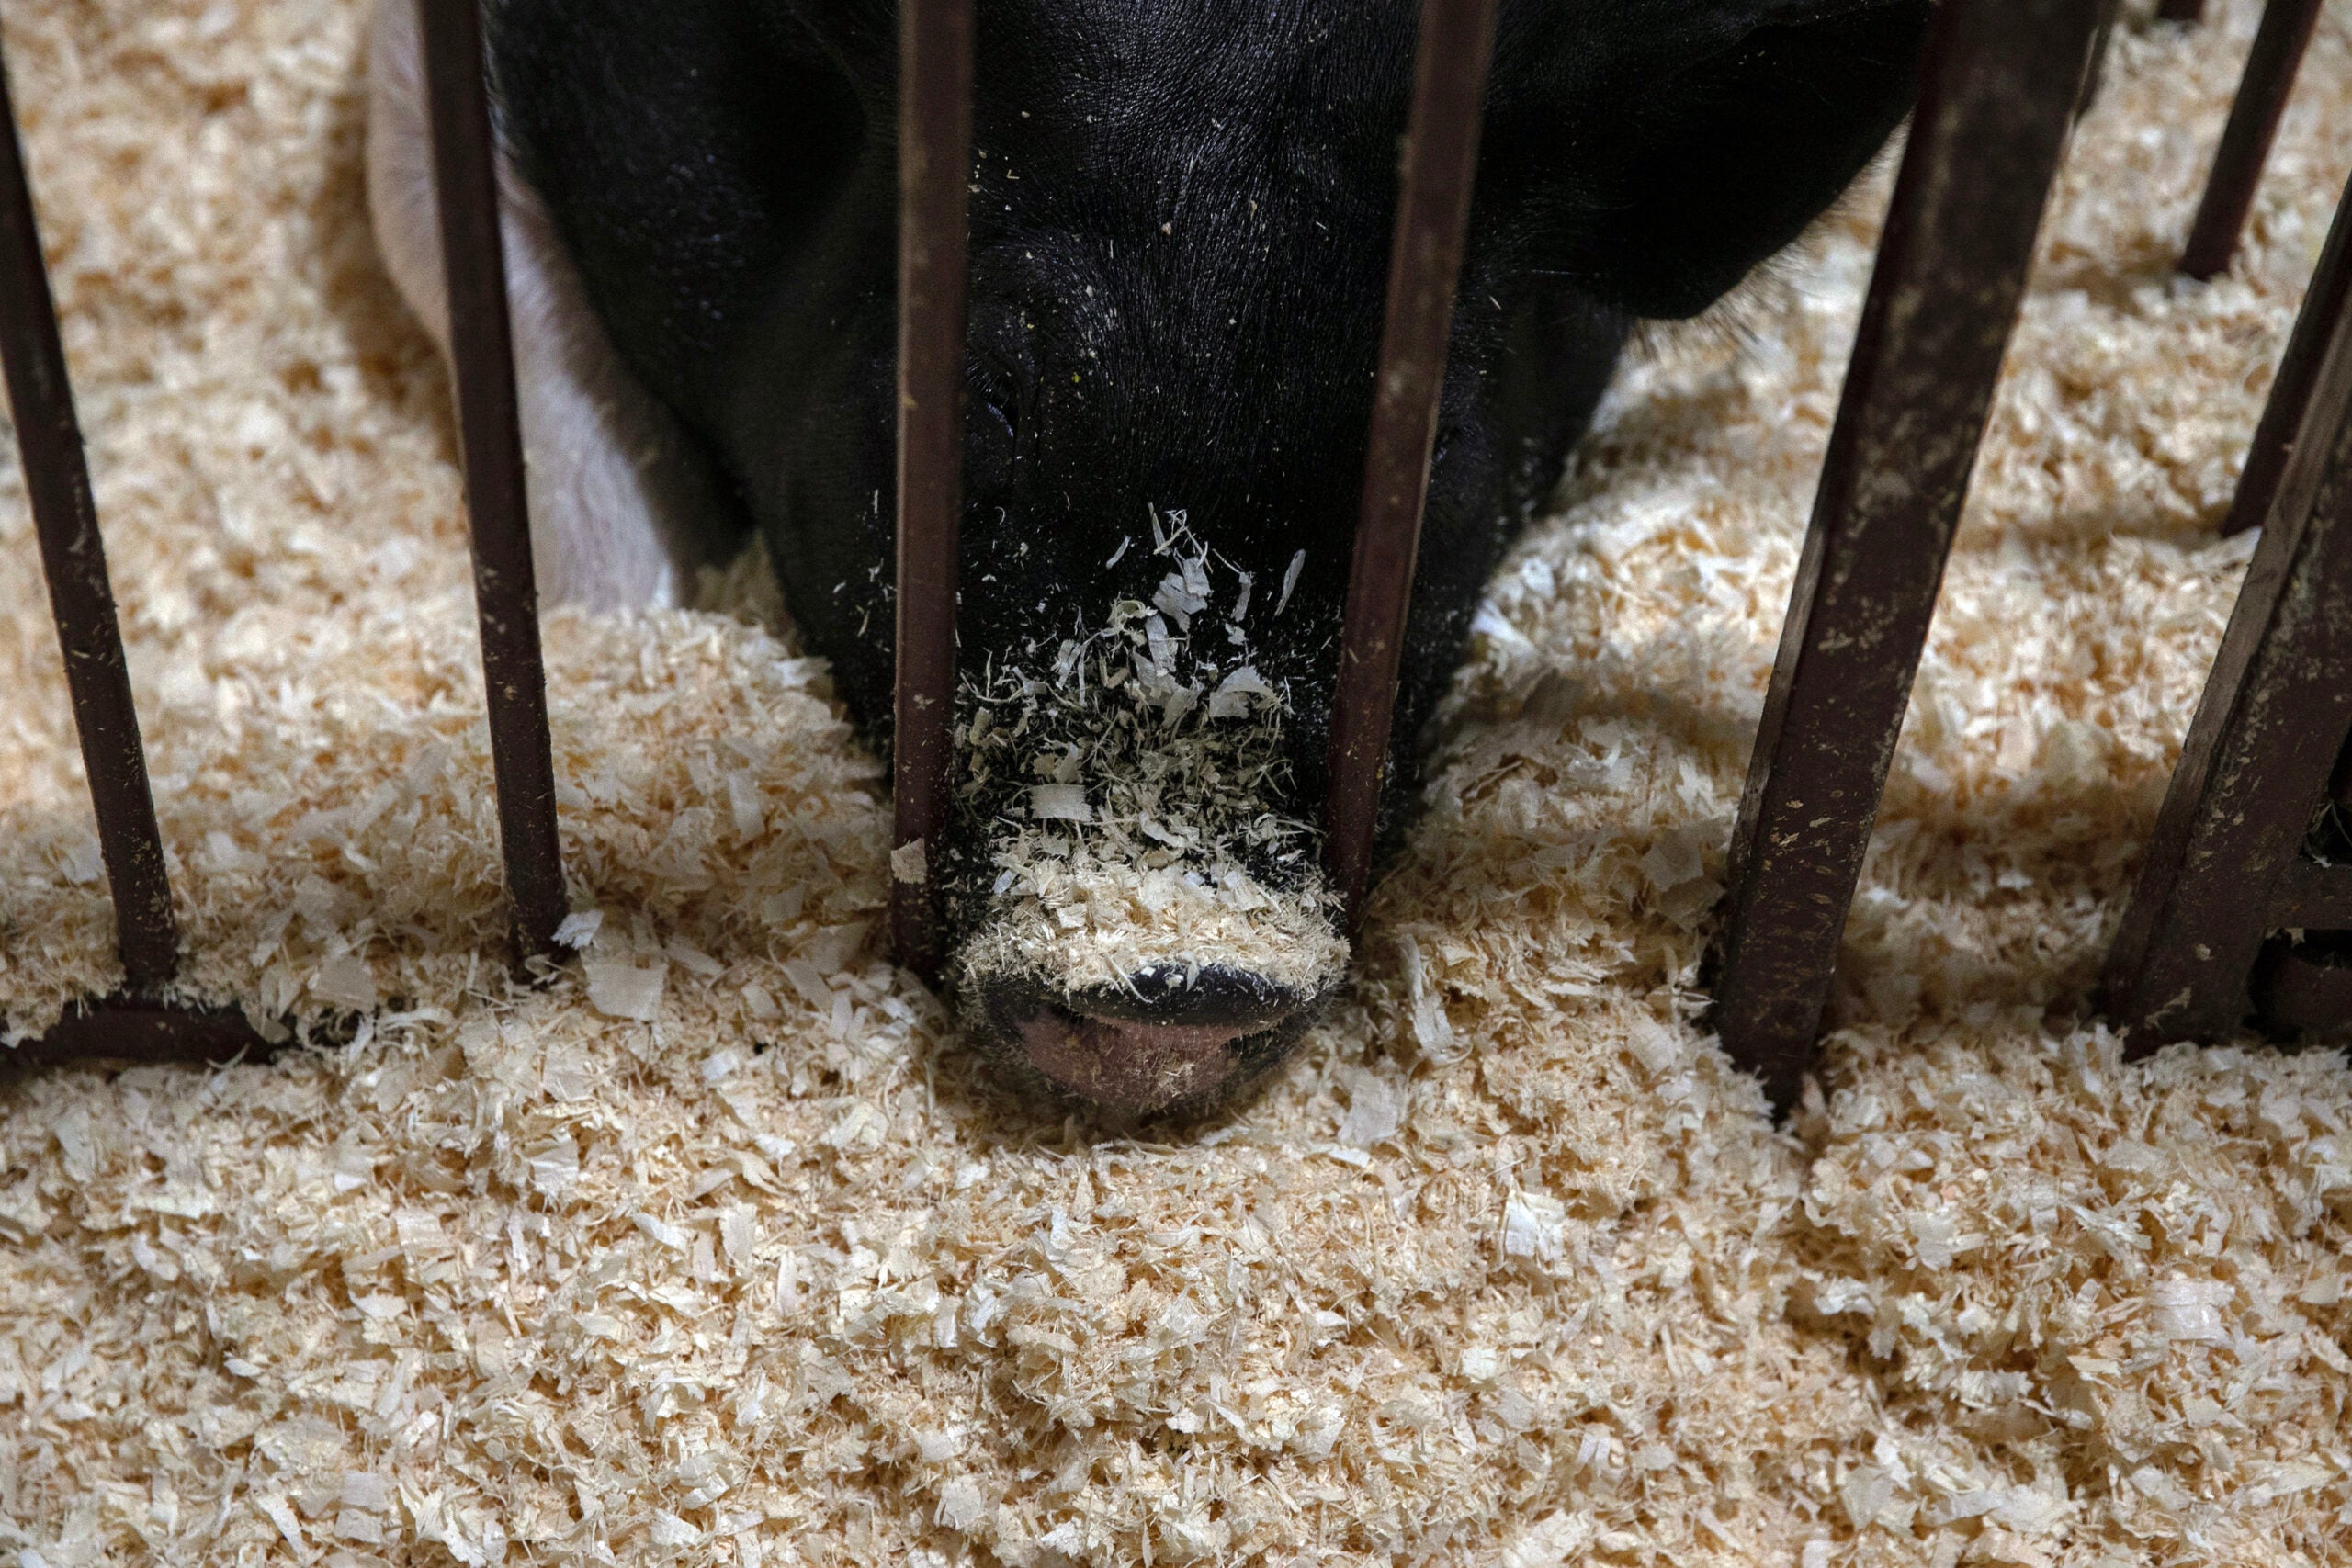 A pig at a county fair in New Lexington, Ohio.